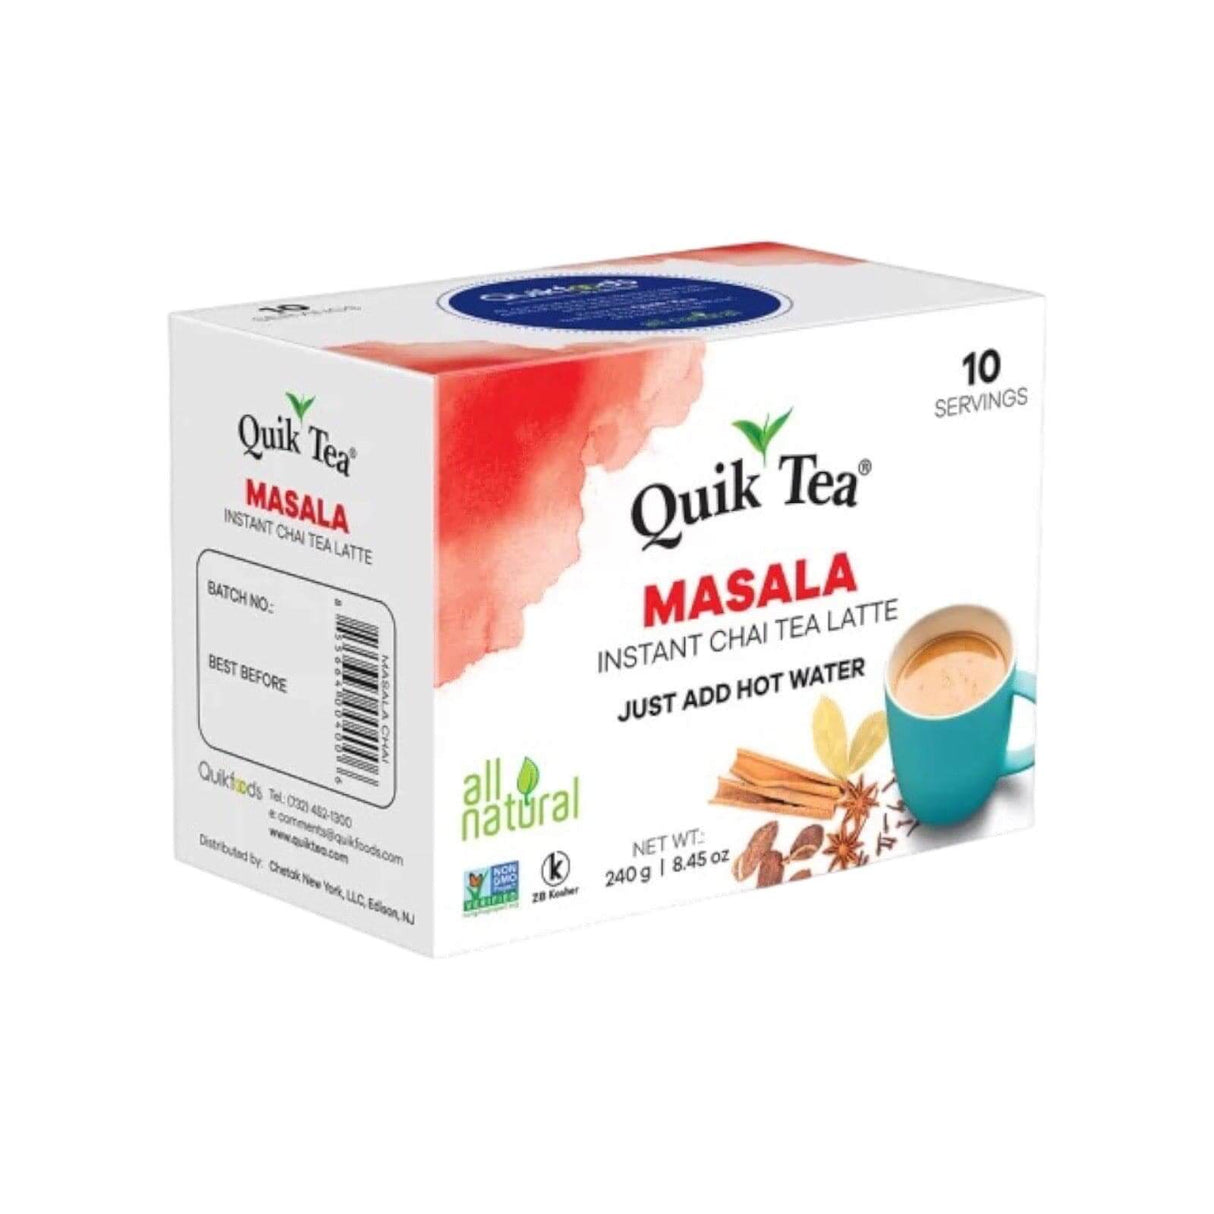 Quik Tea Masala Instant Chai Tea Latte